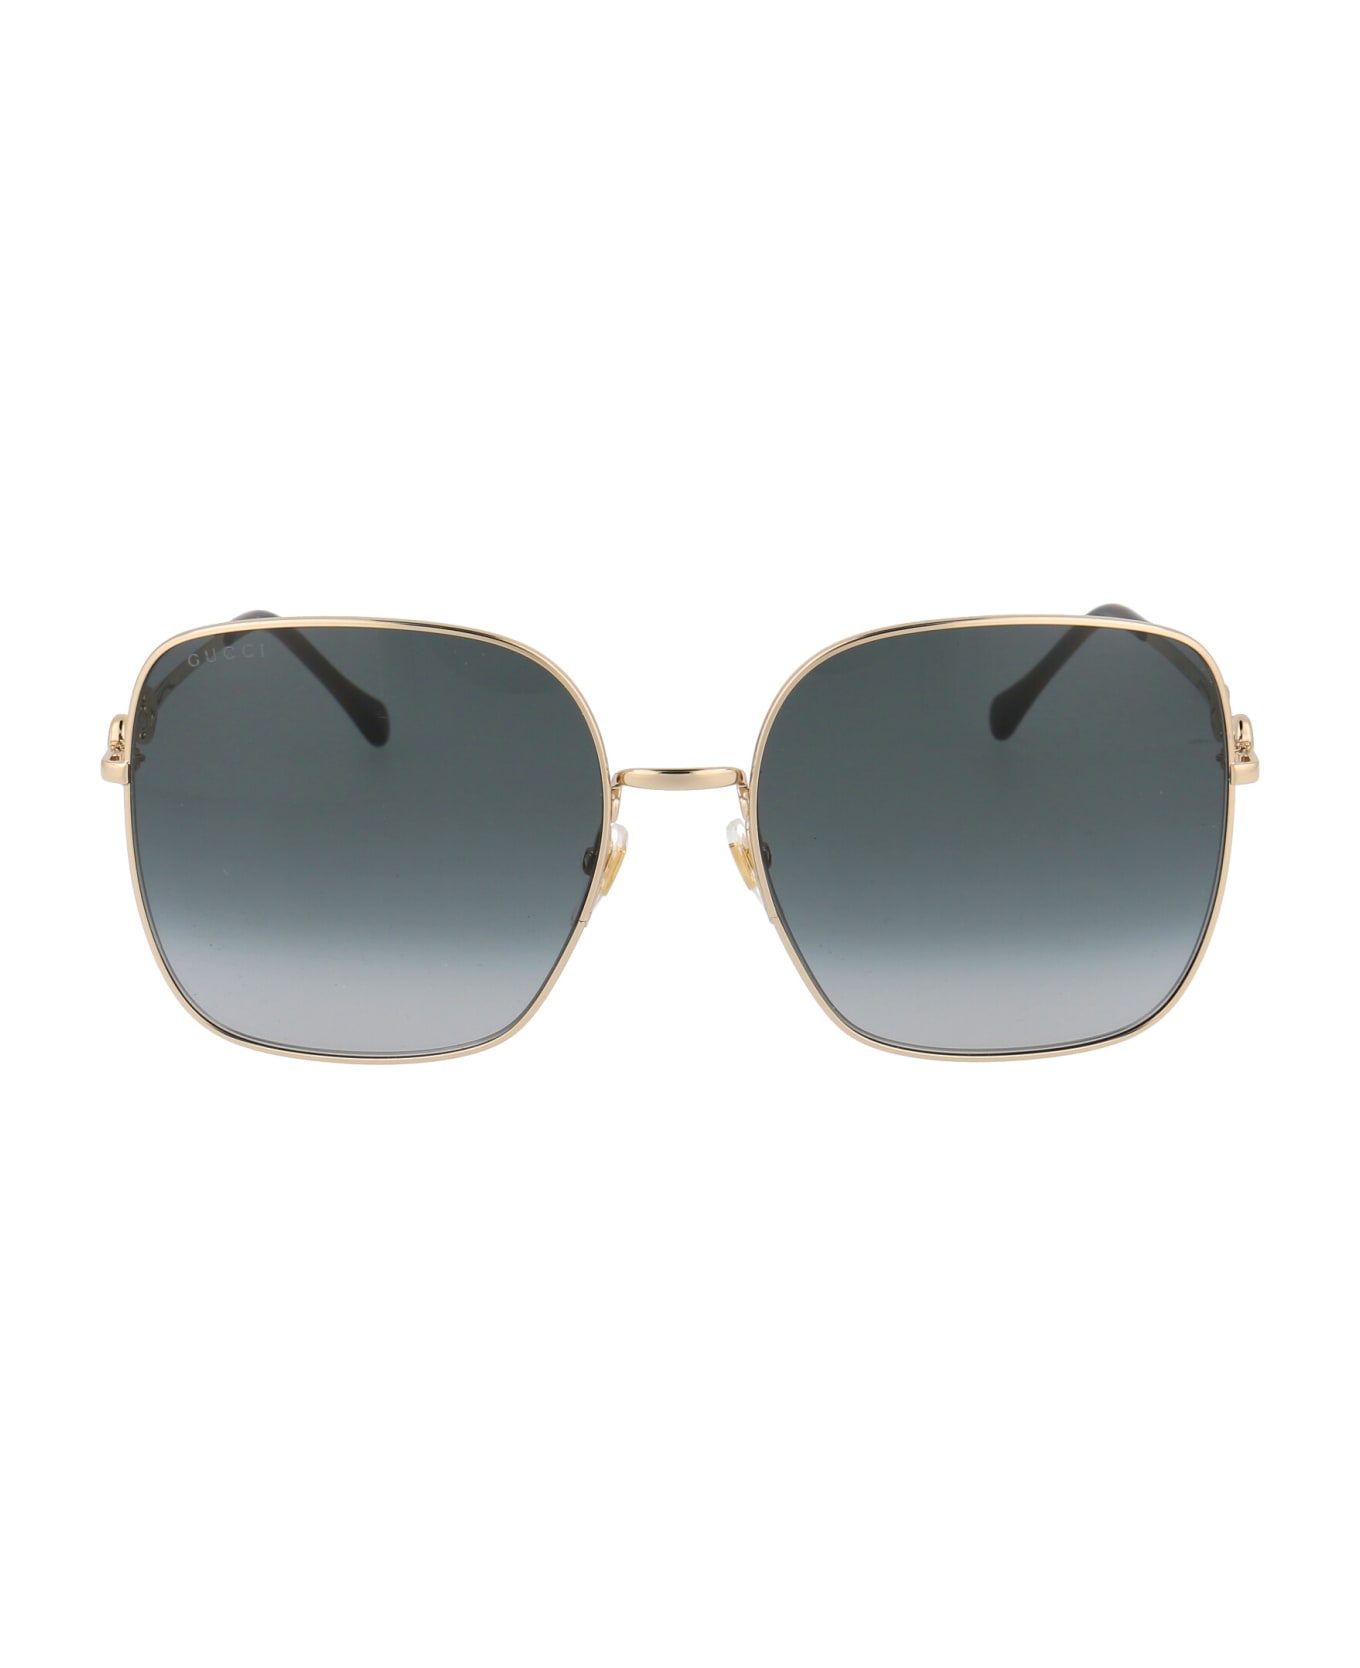 Gucci Eyewear Gg0879s Sunglasses - 001 GOLD GOLD GREY